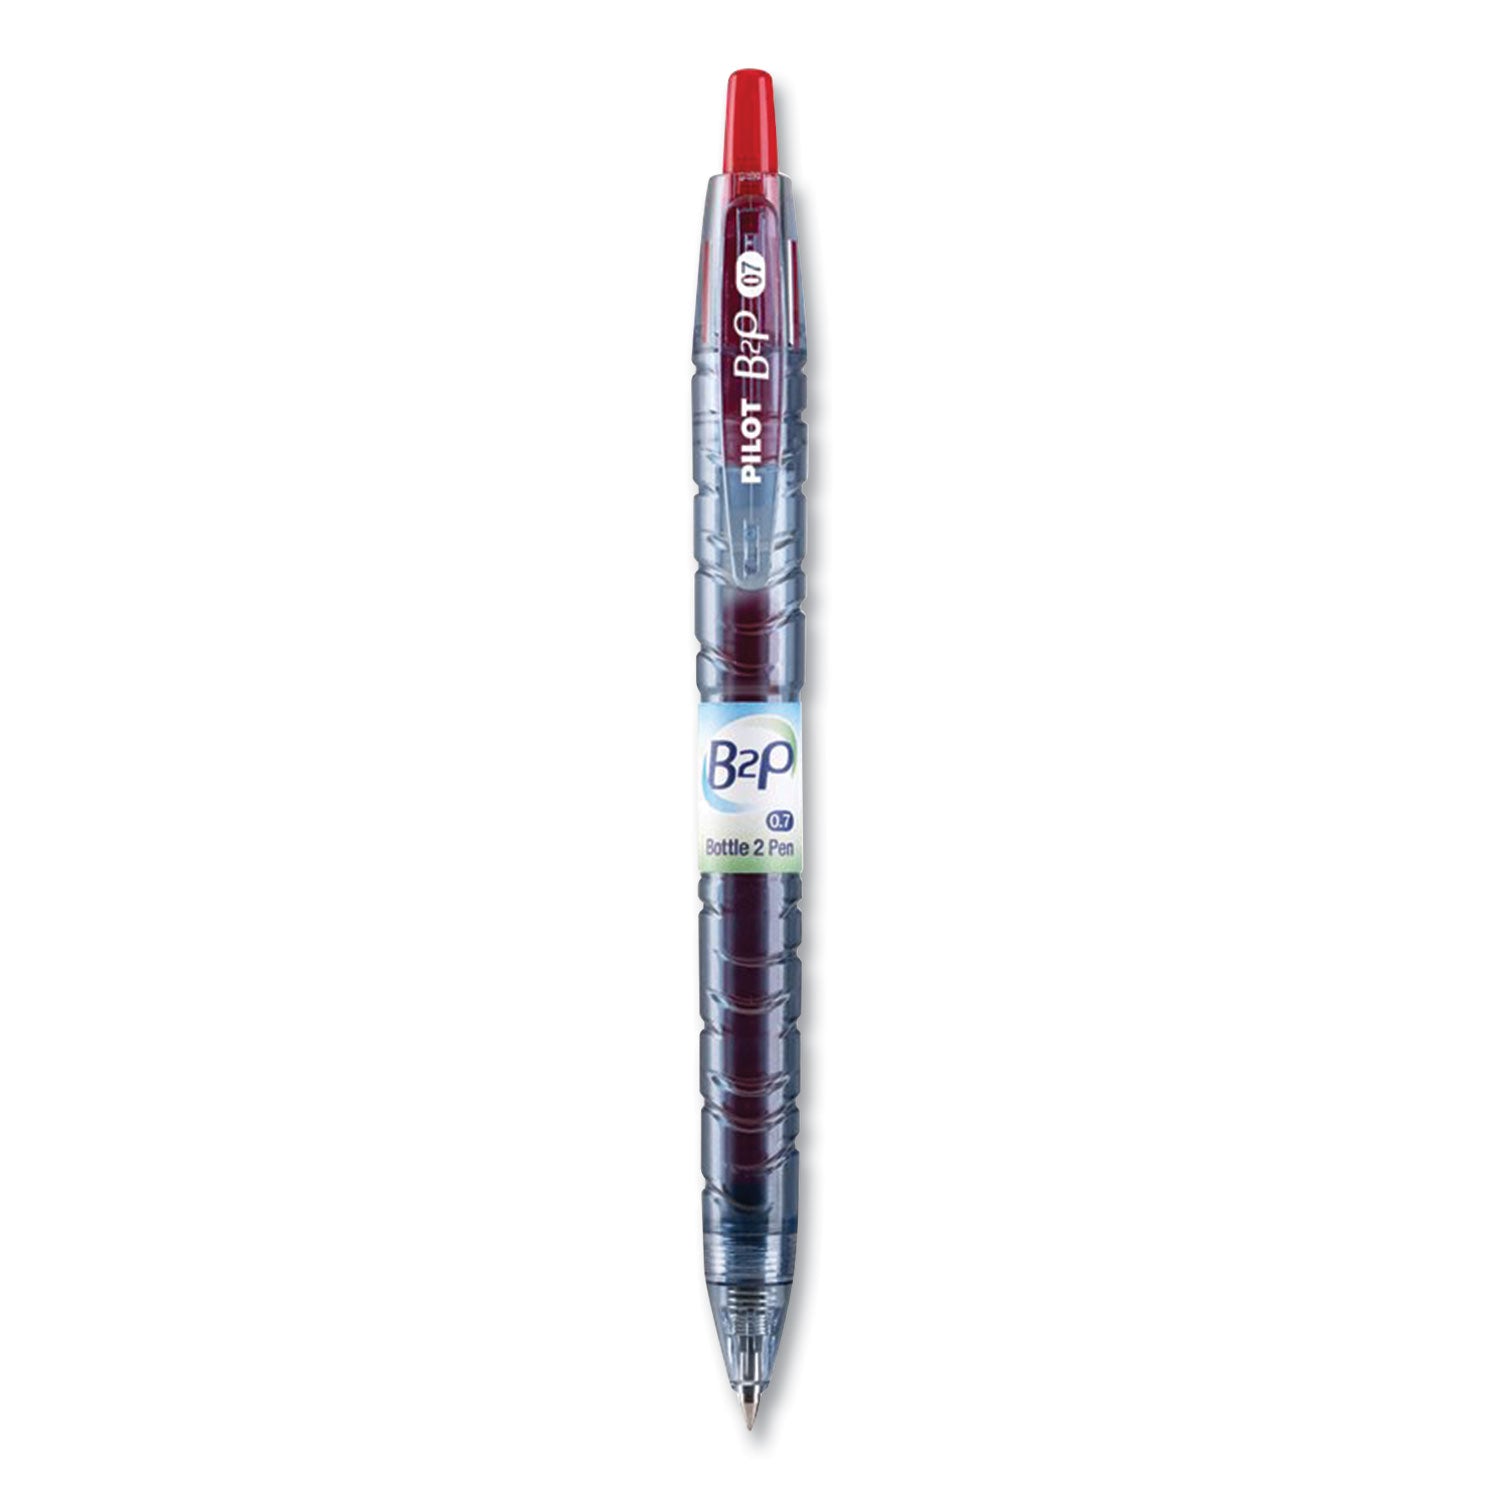 b2p-bottle-2-pen-recycled-ballpoint-pen-retractable-fine-07-mm-red-ink-translucent-blue-barrel-dozen_pil34602 - 1